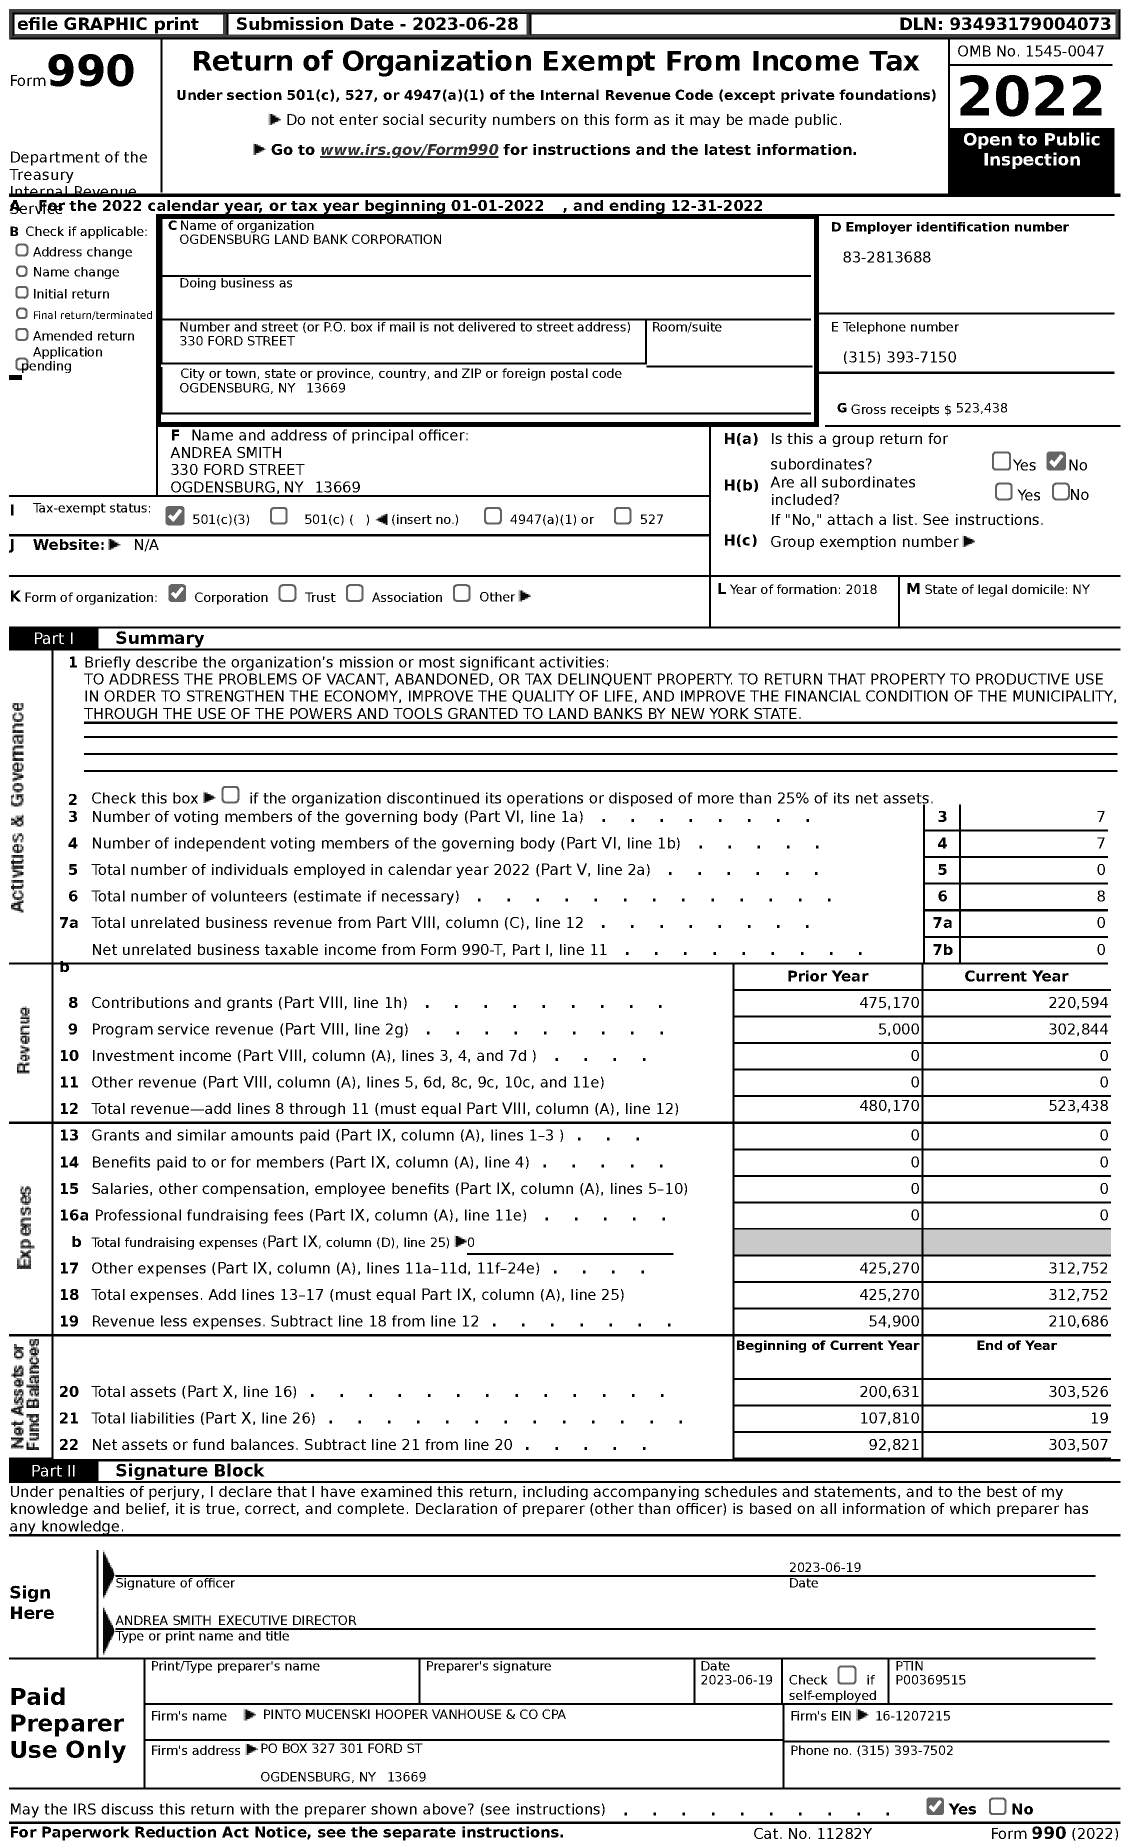 Image of first page of 2022 Form 990 for Ogdensburg Land Bank Corporation